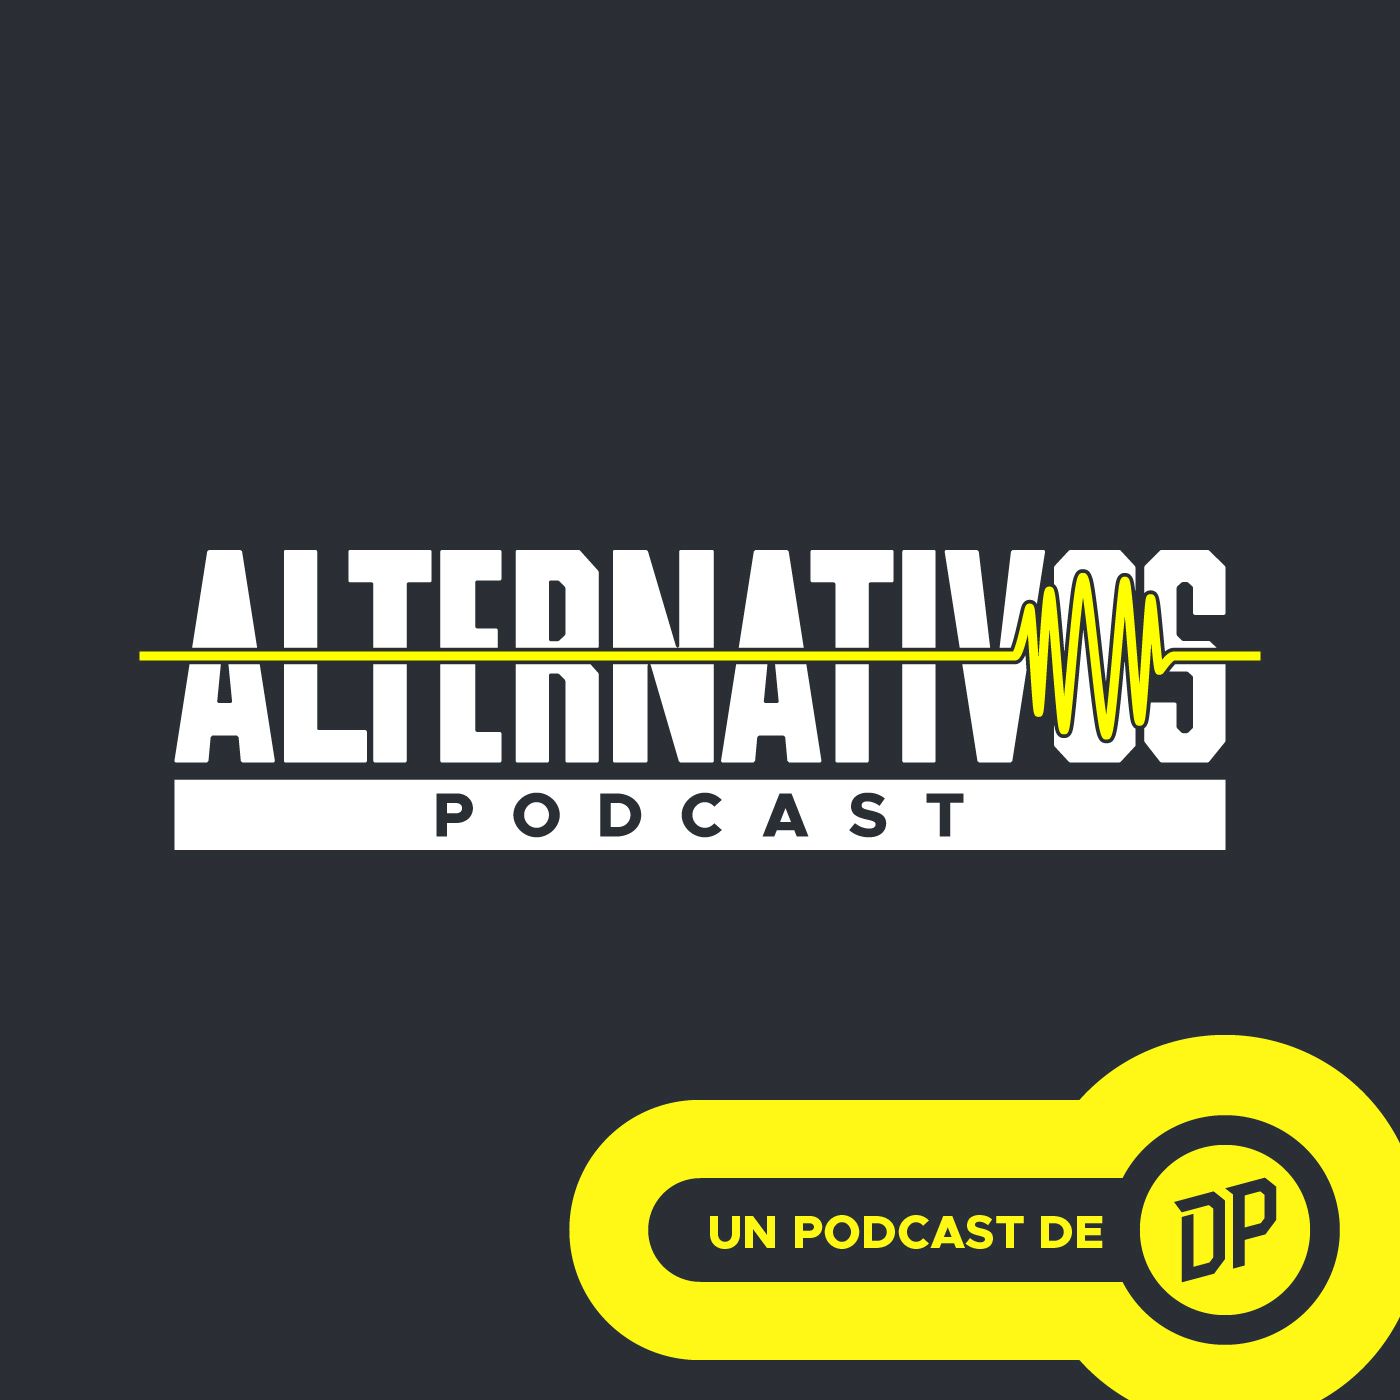 Alternativos Podcast